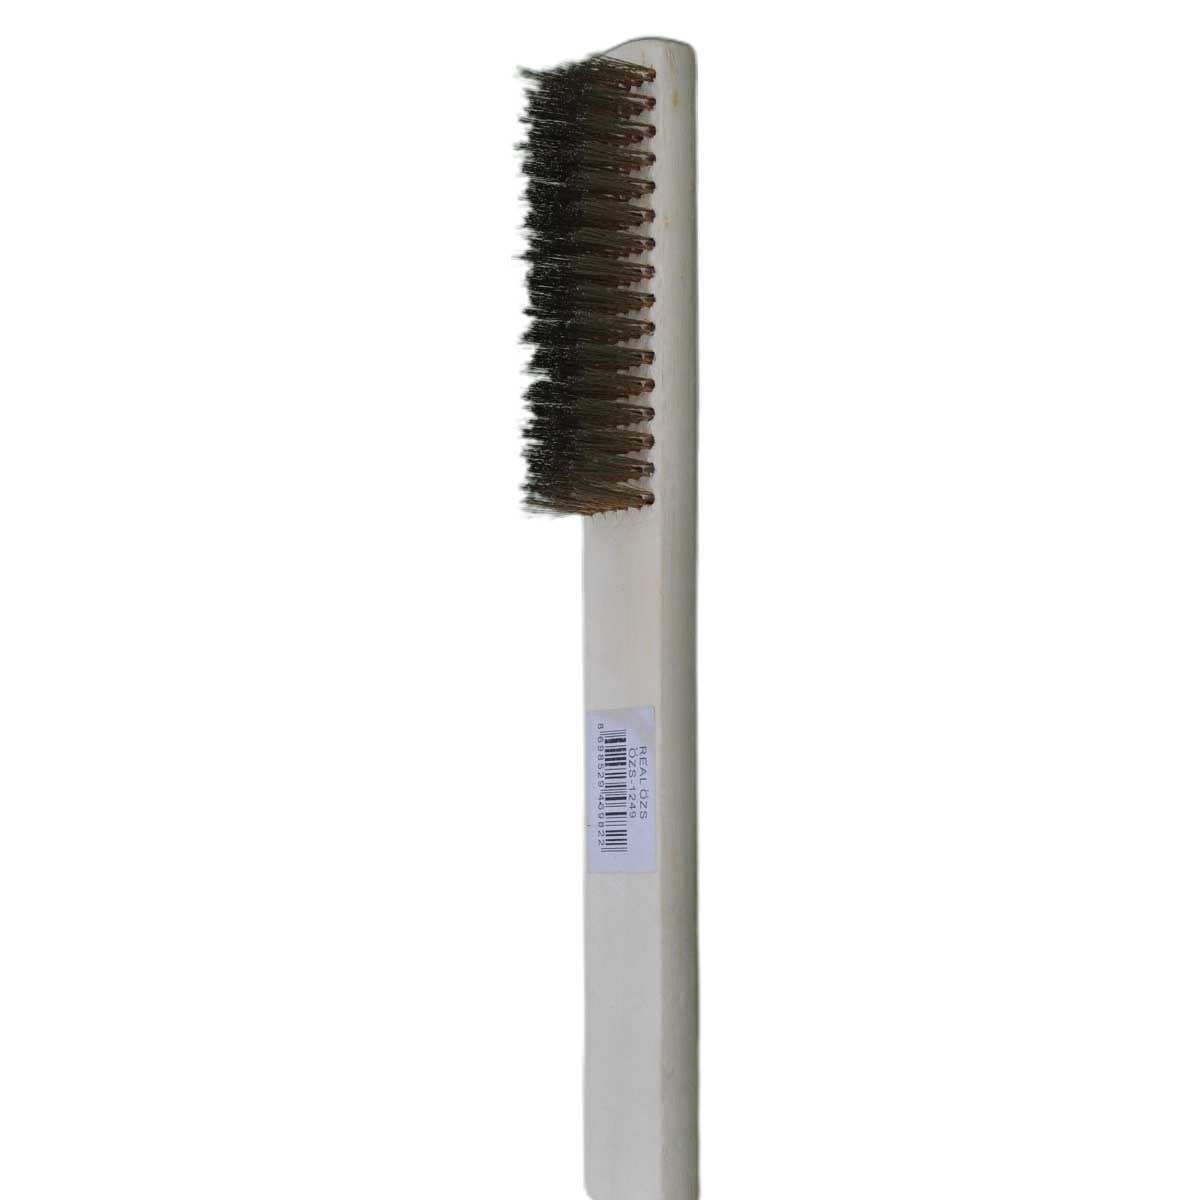 CLZ192 Metal Telli Fırça Ahşap Saplı Pas Kir Sökme Temizleme Fırçası (4172)